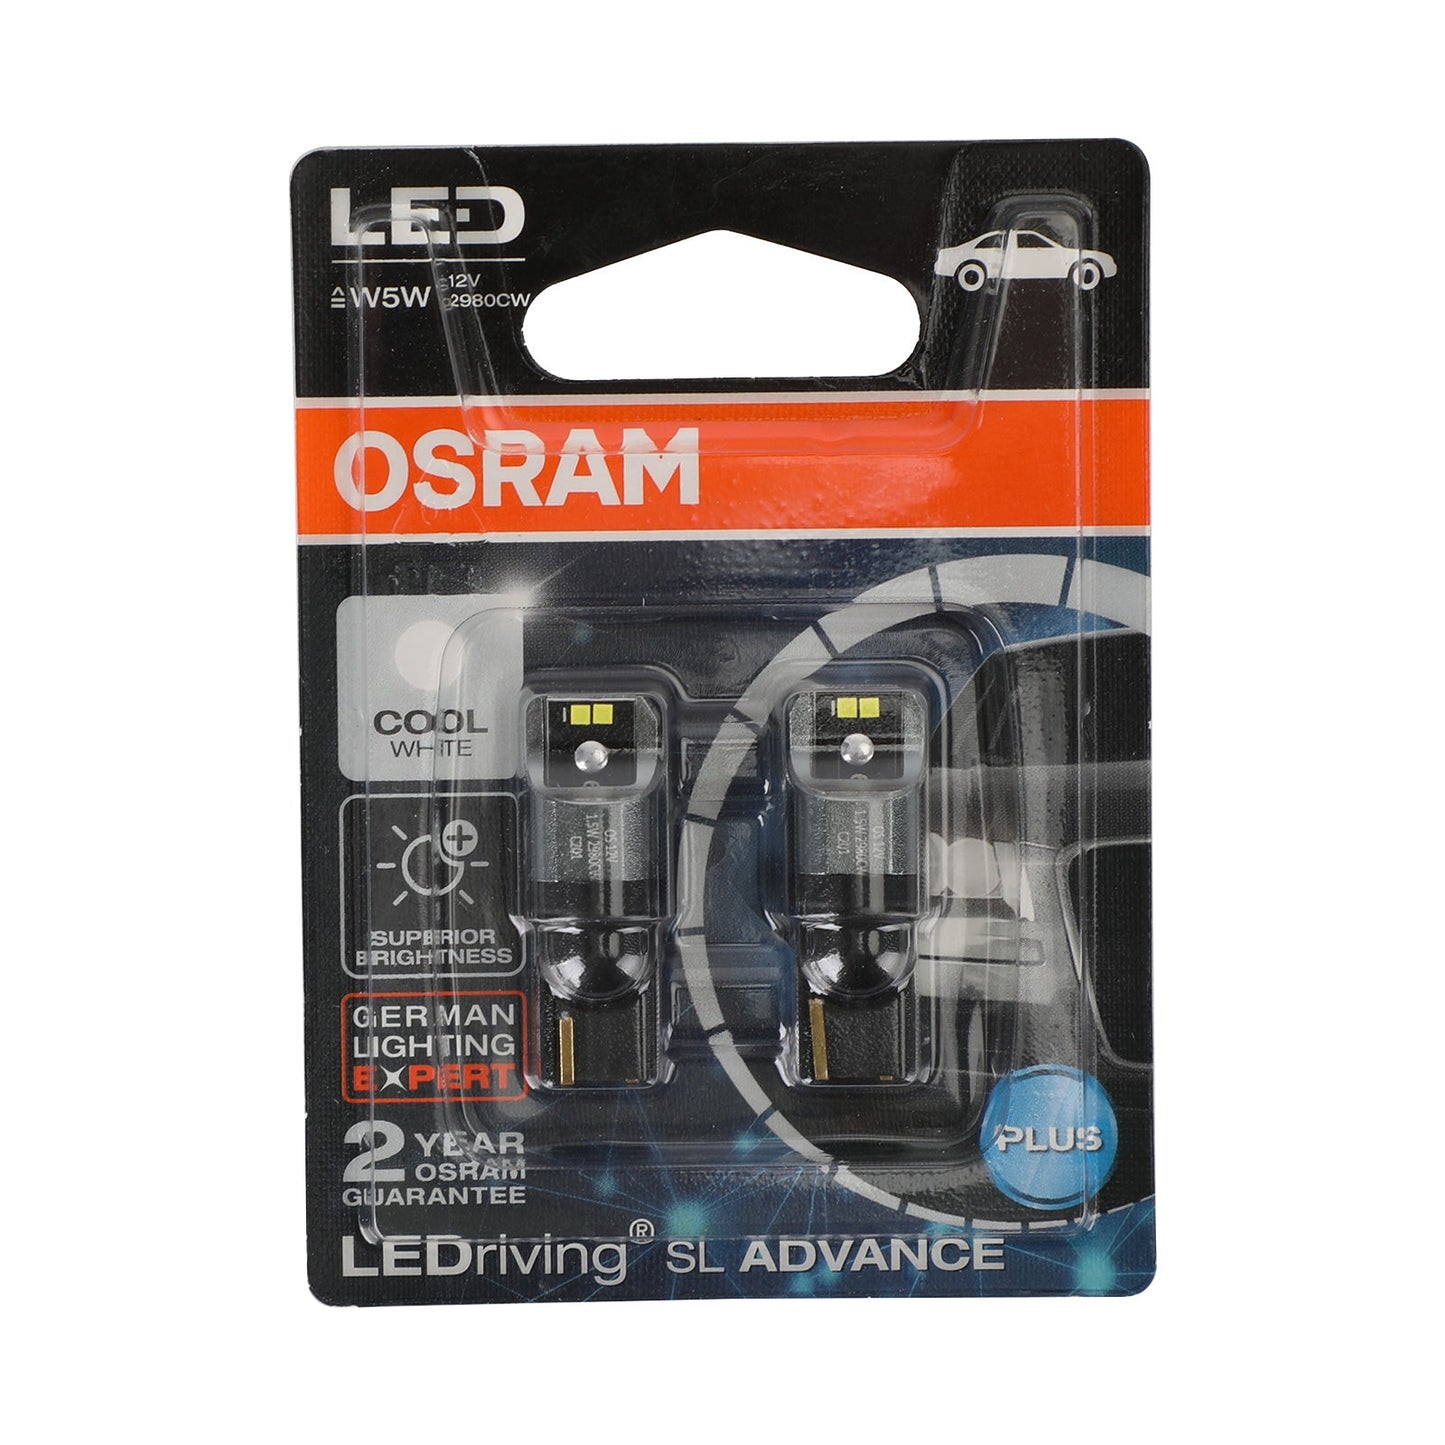 2x For OSRAM 2980CW Car Auxiliary Bulbs LED W5W 12V1.5W W2.1x9.5d